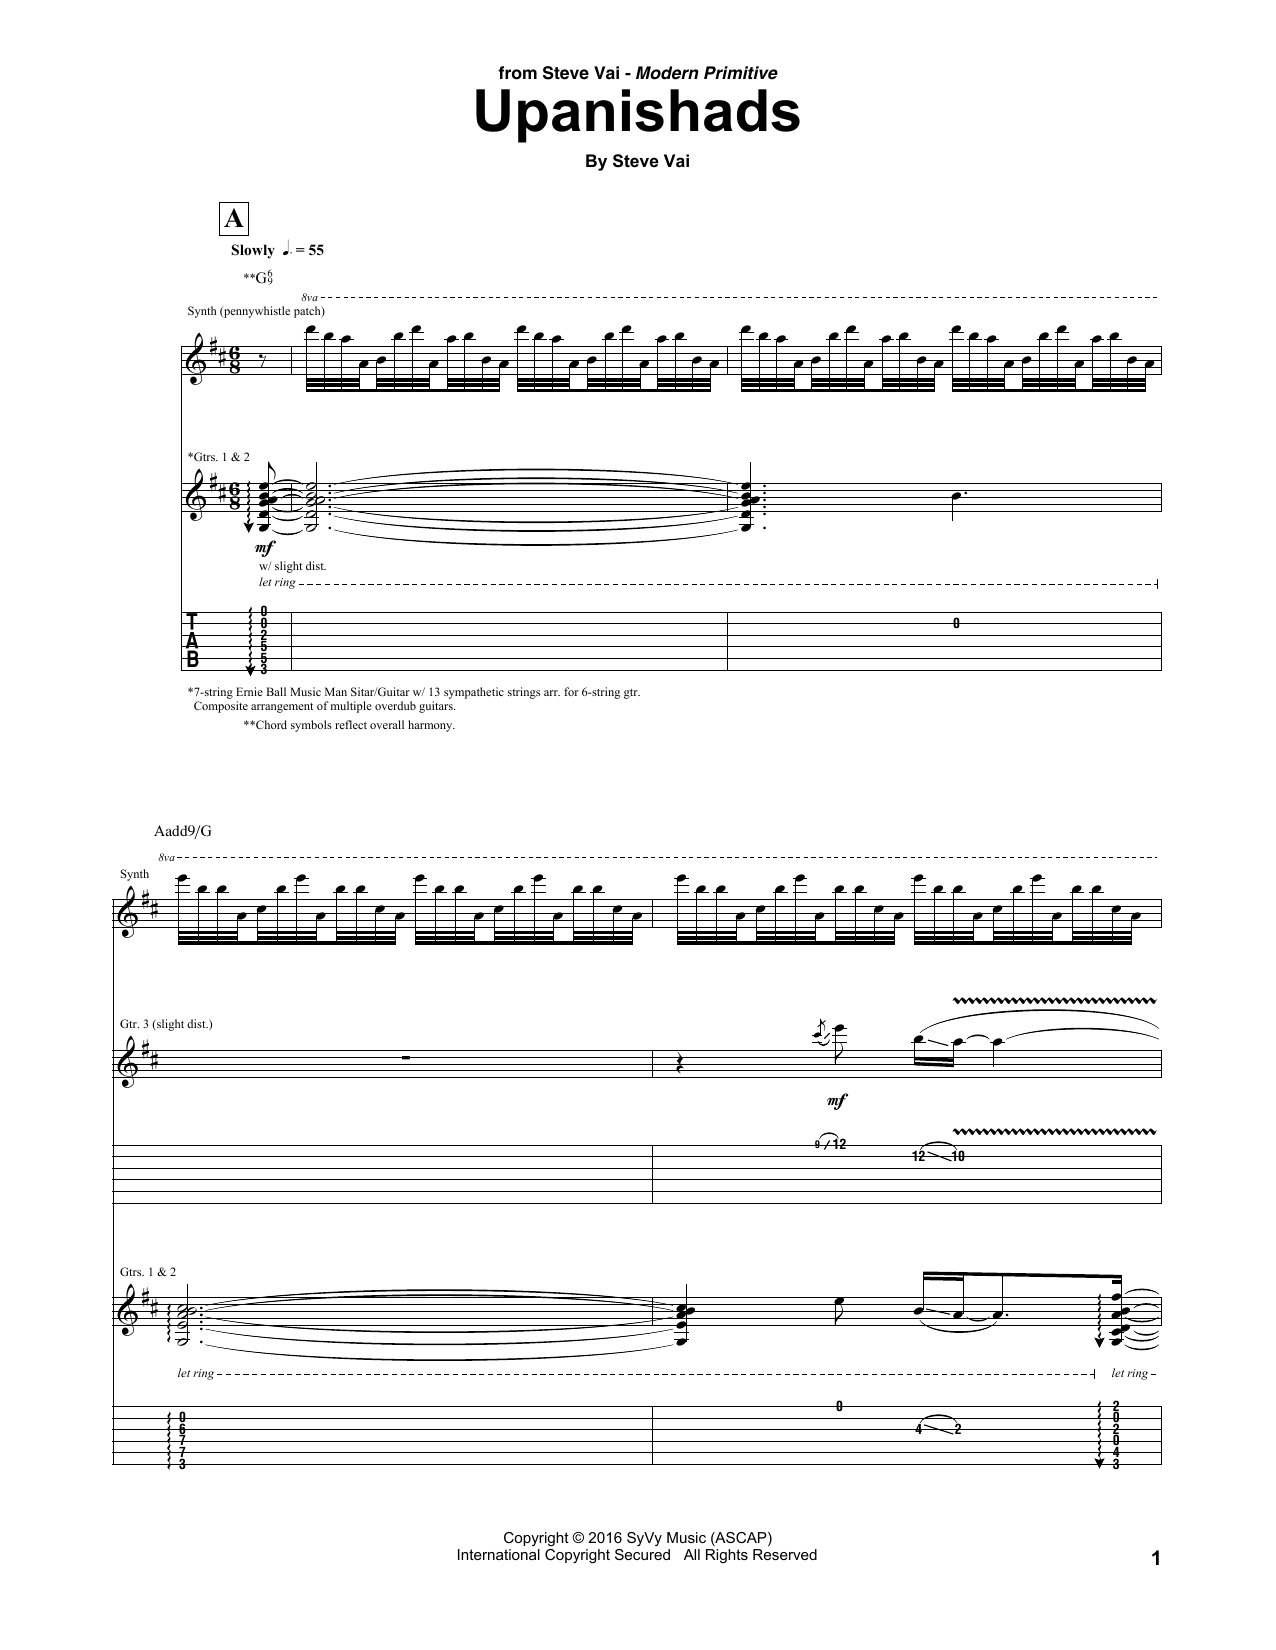 Steve Vai Upanishads Sheet Music Notes & Chords for Guitar Tab - Download or Print PDF